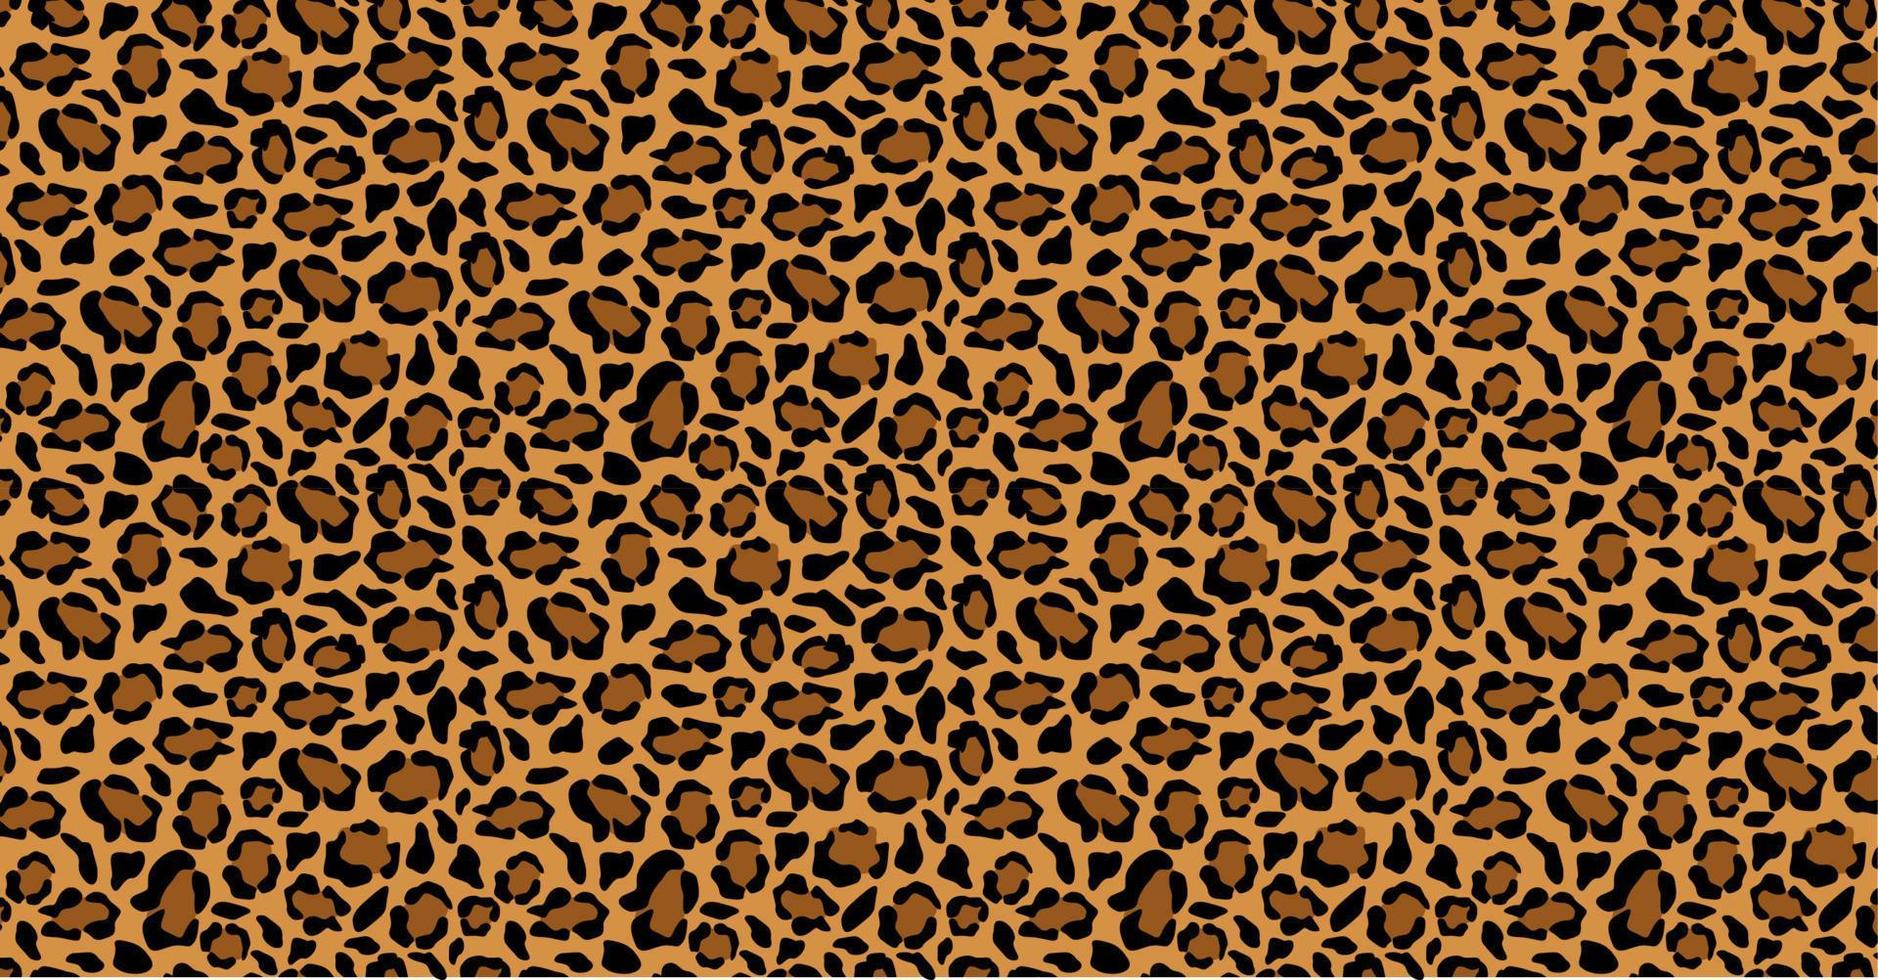 panter läder traceryen bakgrund. kamouflage gul panter fläckar med svart jaguar konturer i orange gepard vektor Färg.